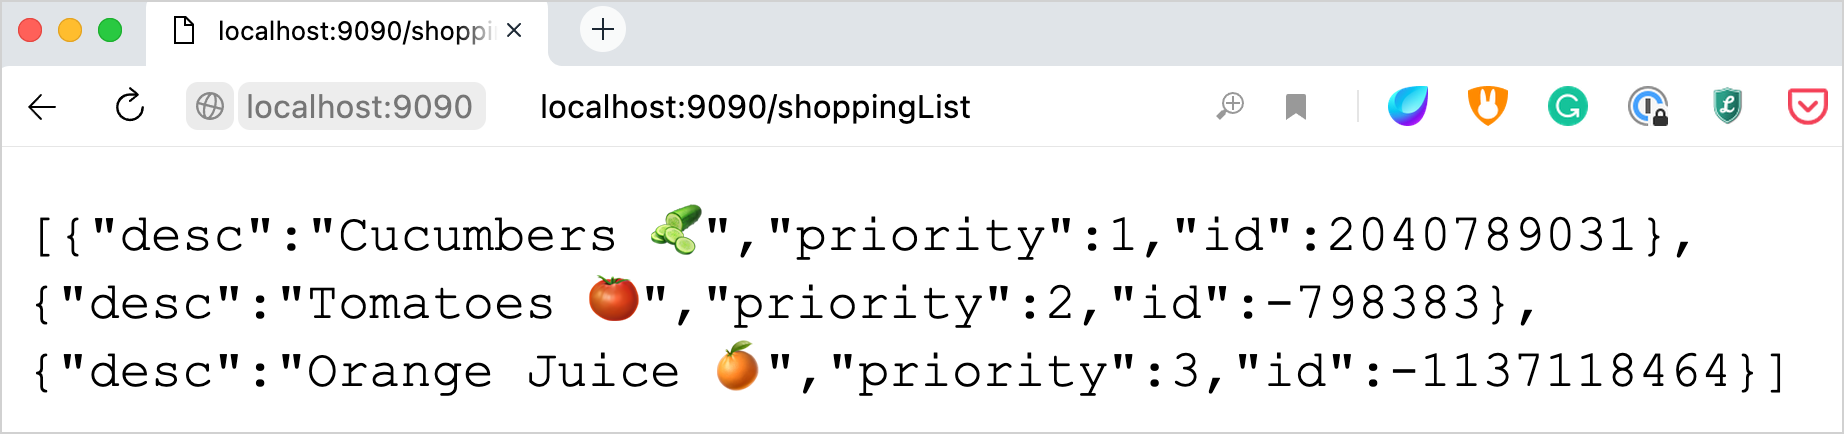 Shopping list in JSON formatting